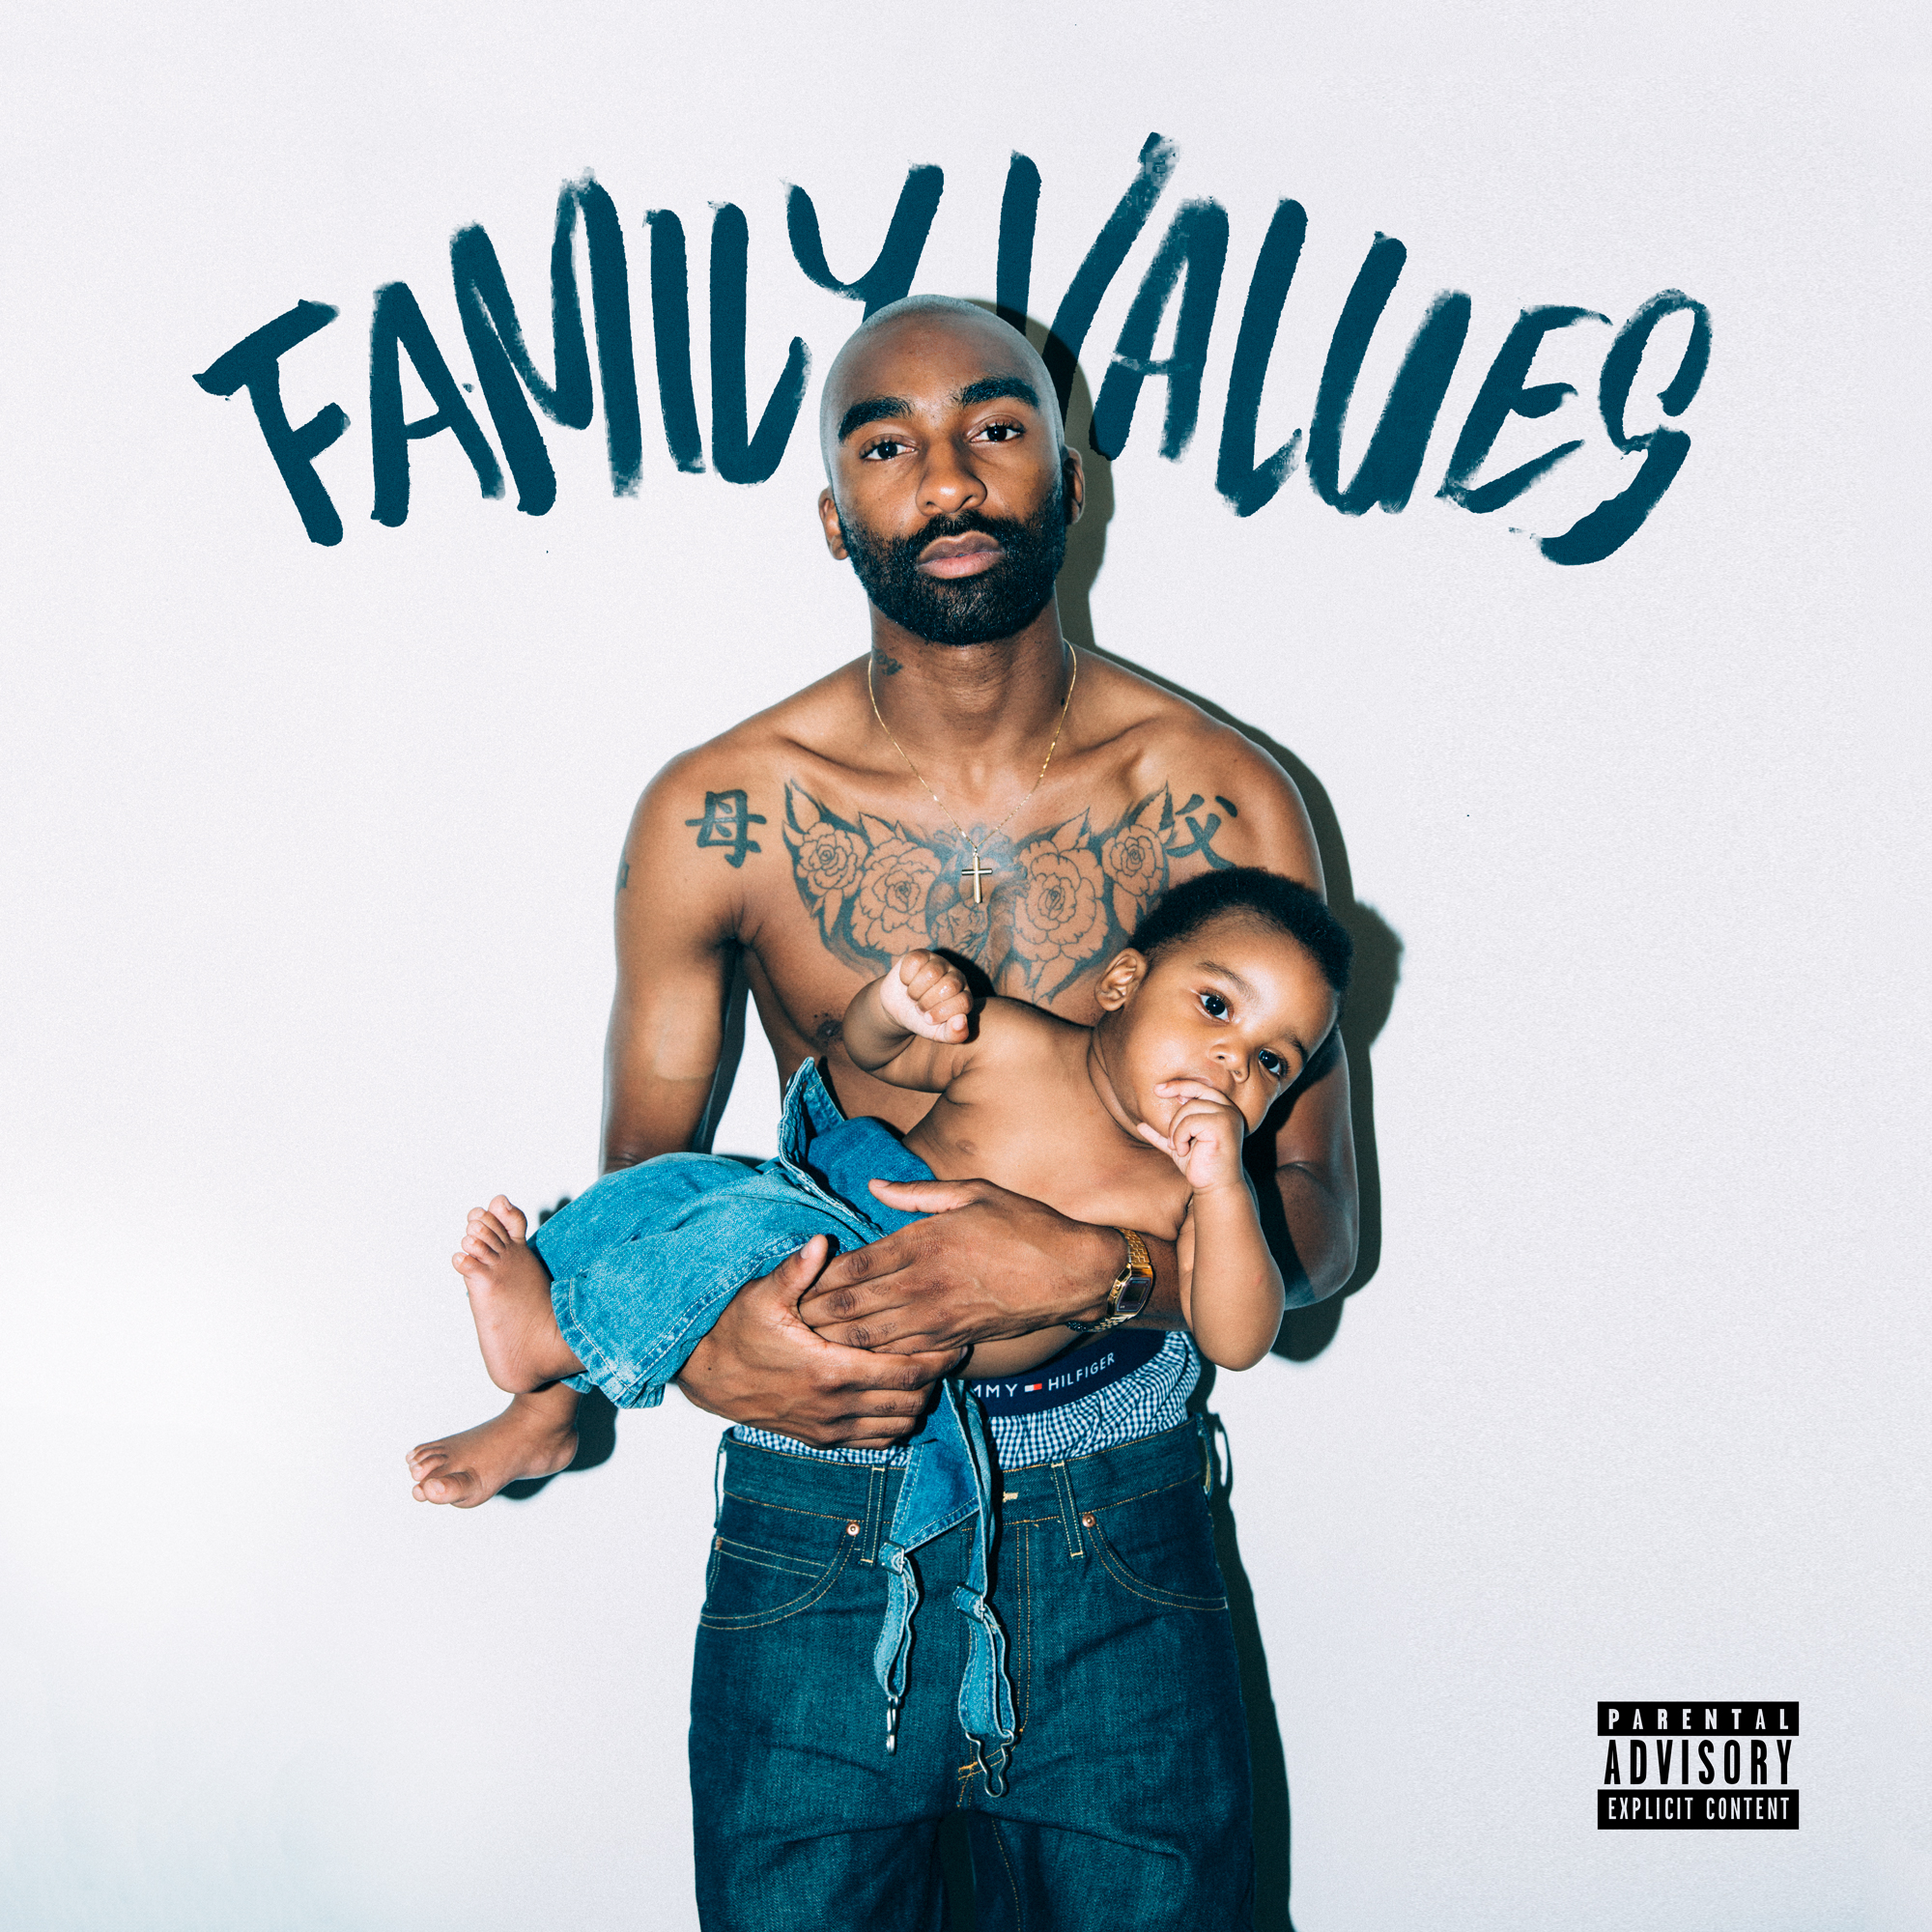 riky-rick-family-values-album-cover